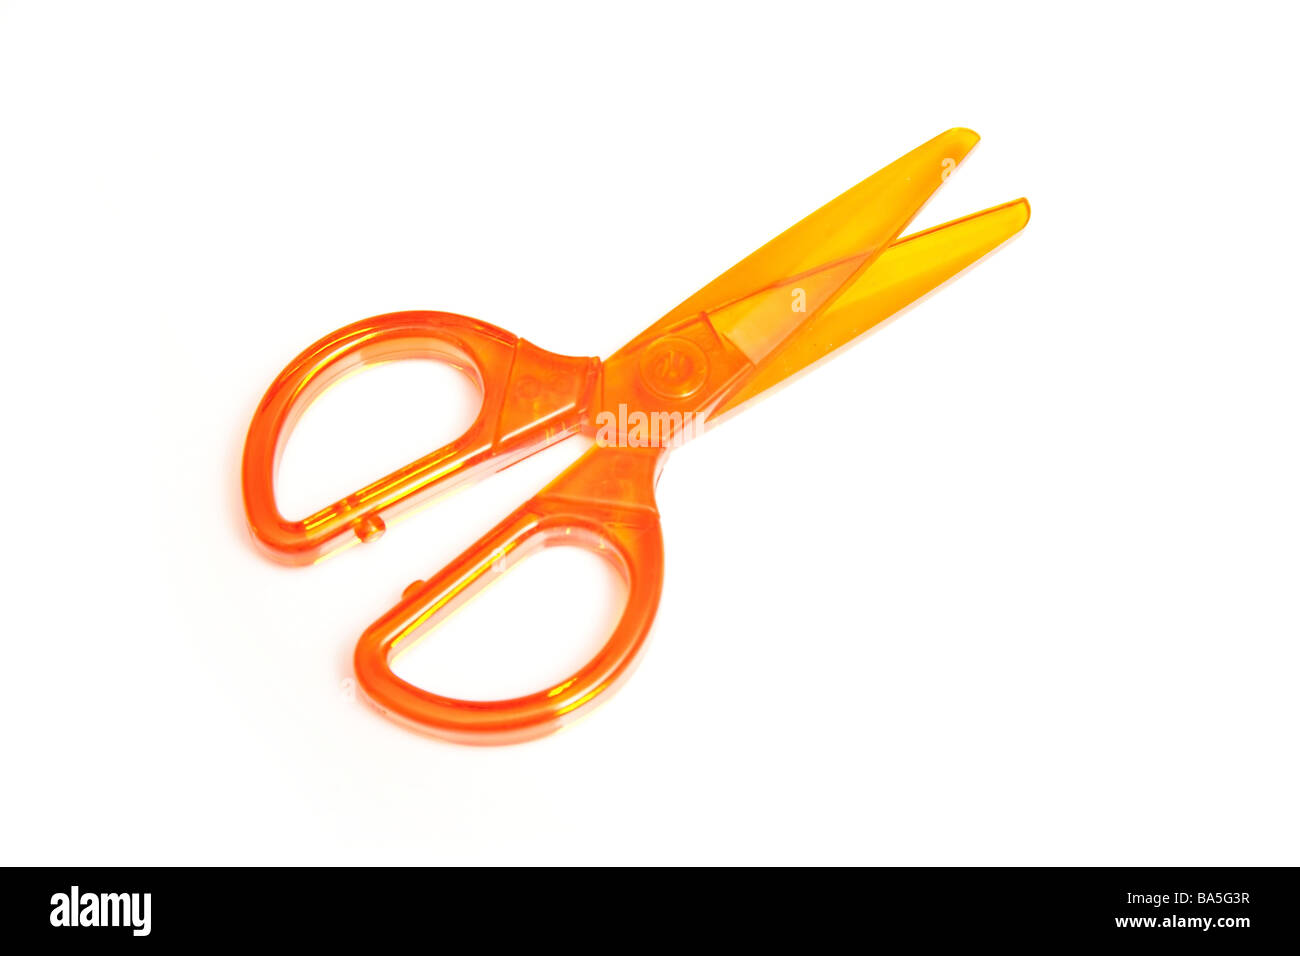 https://c8.alamy.com/comp/BA5G3R/plastic-kids-safety-scissors-isolated-on-a-white-studio-background-BA5G3R.jpg